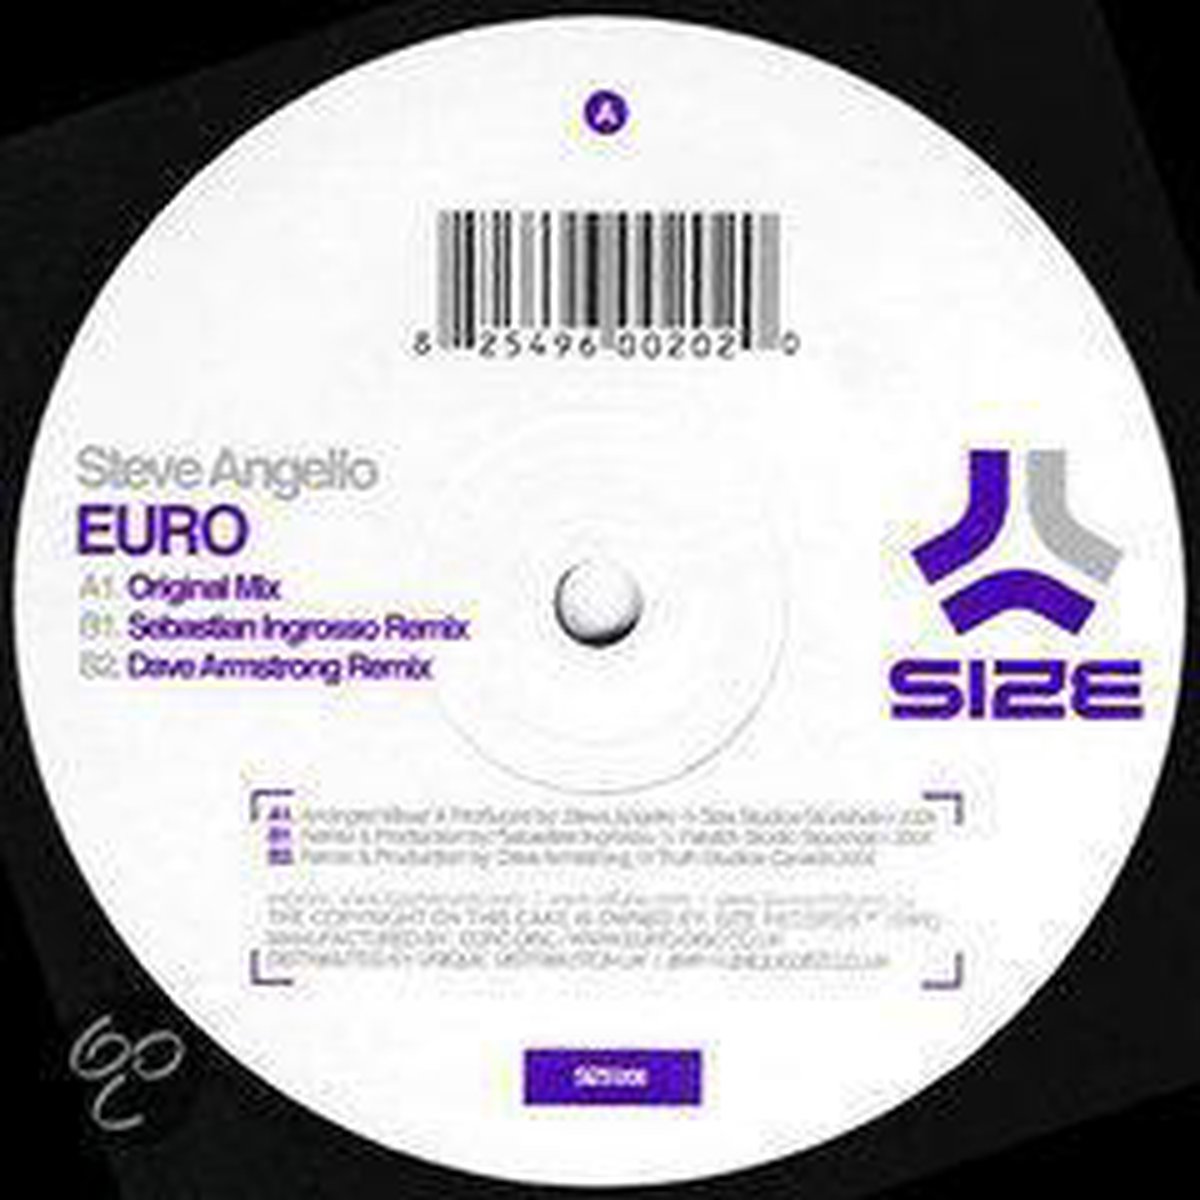 Euro - Steve Angello